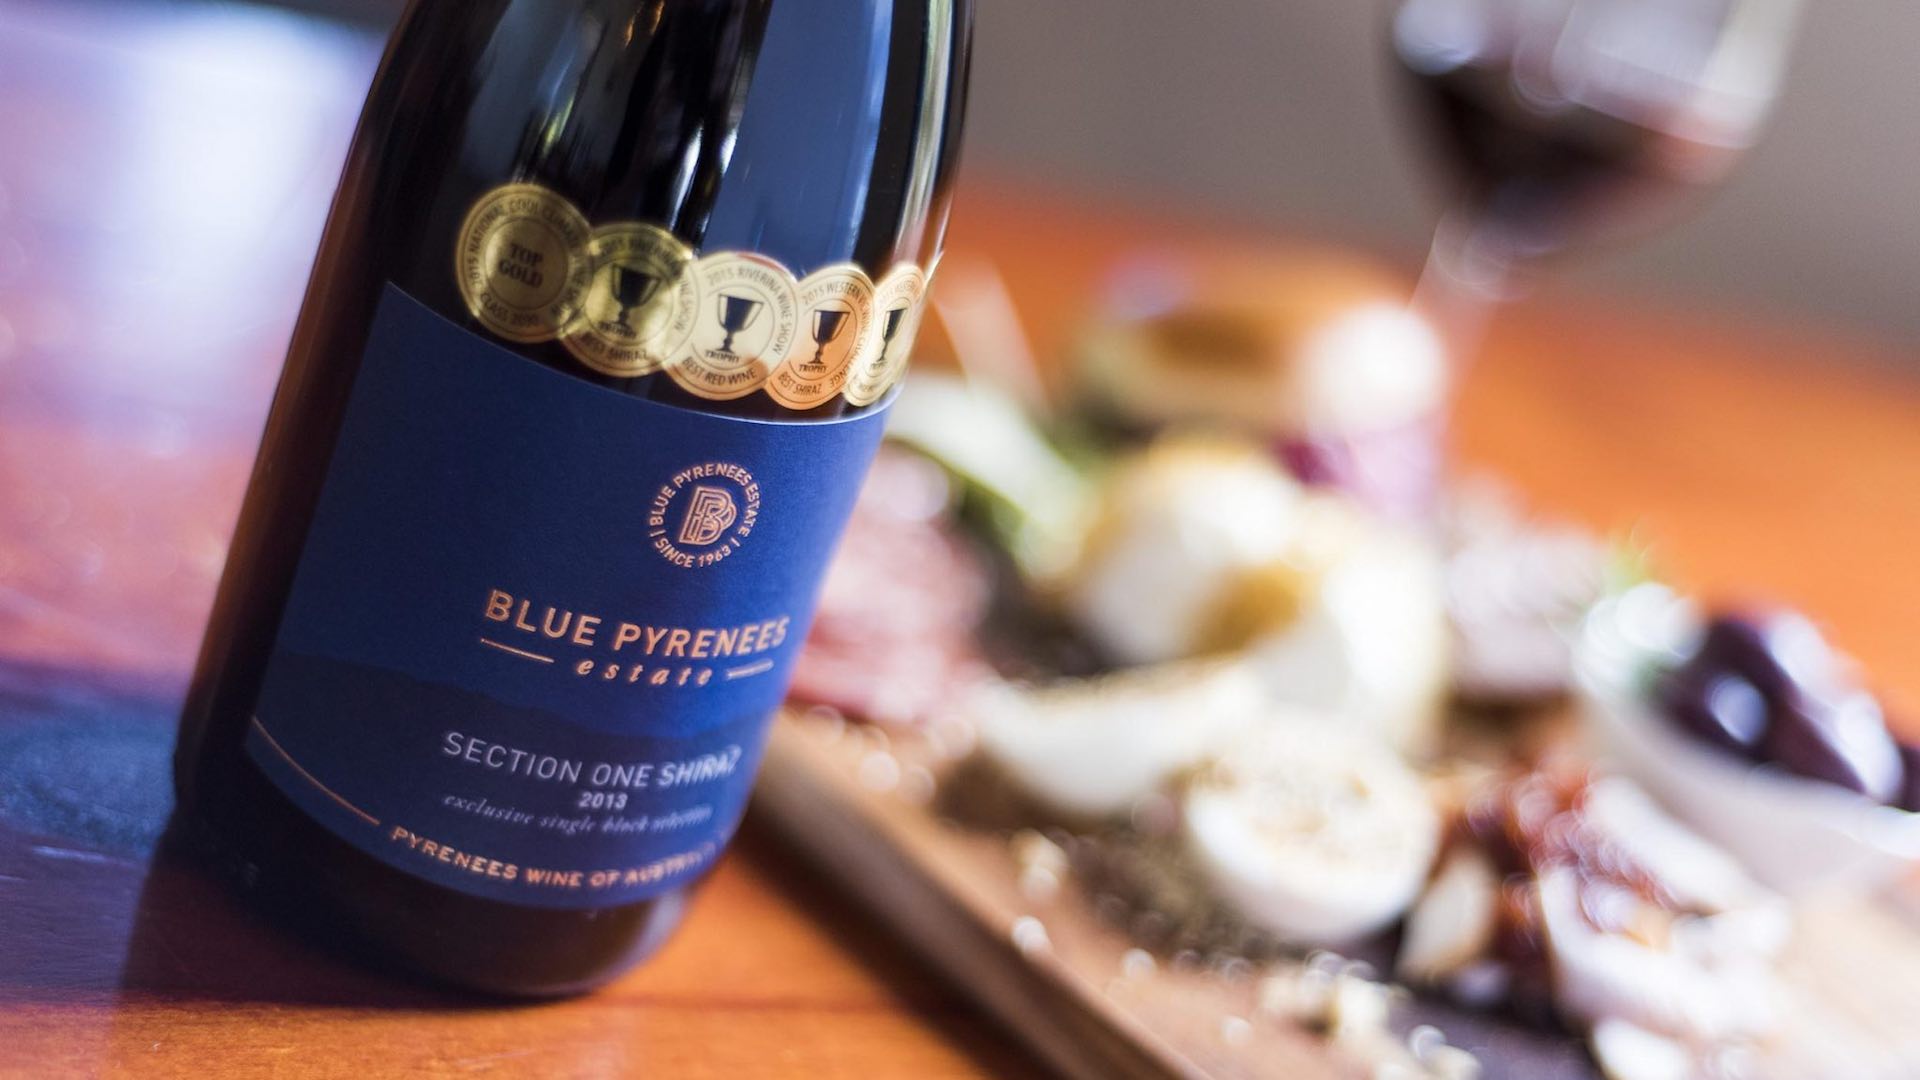 Blue Pyrenees winery in Ballarat